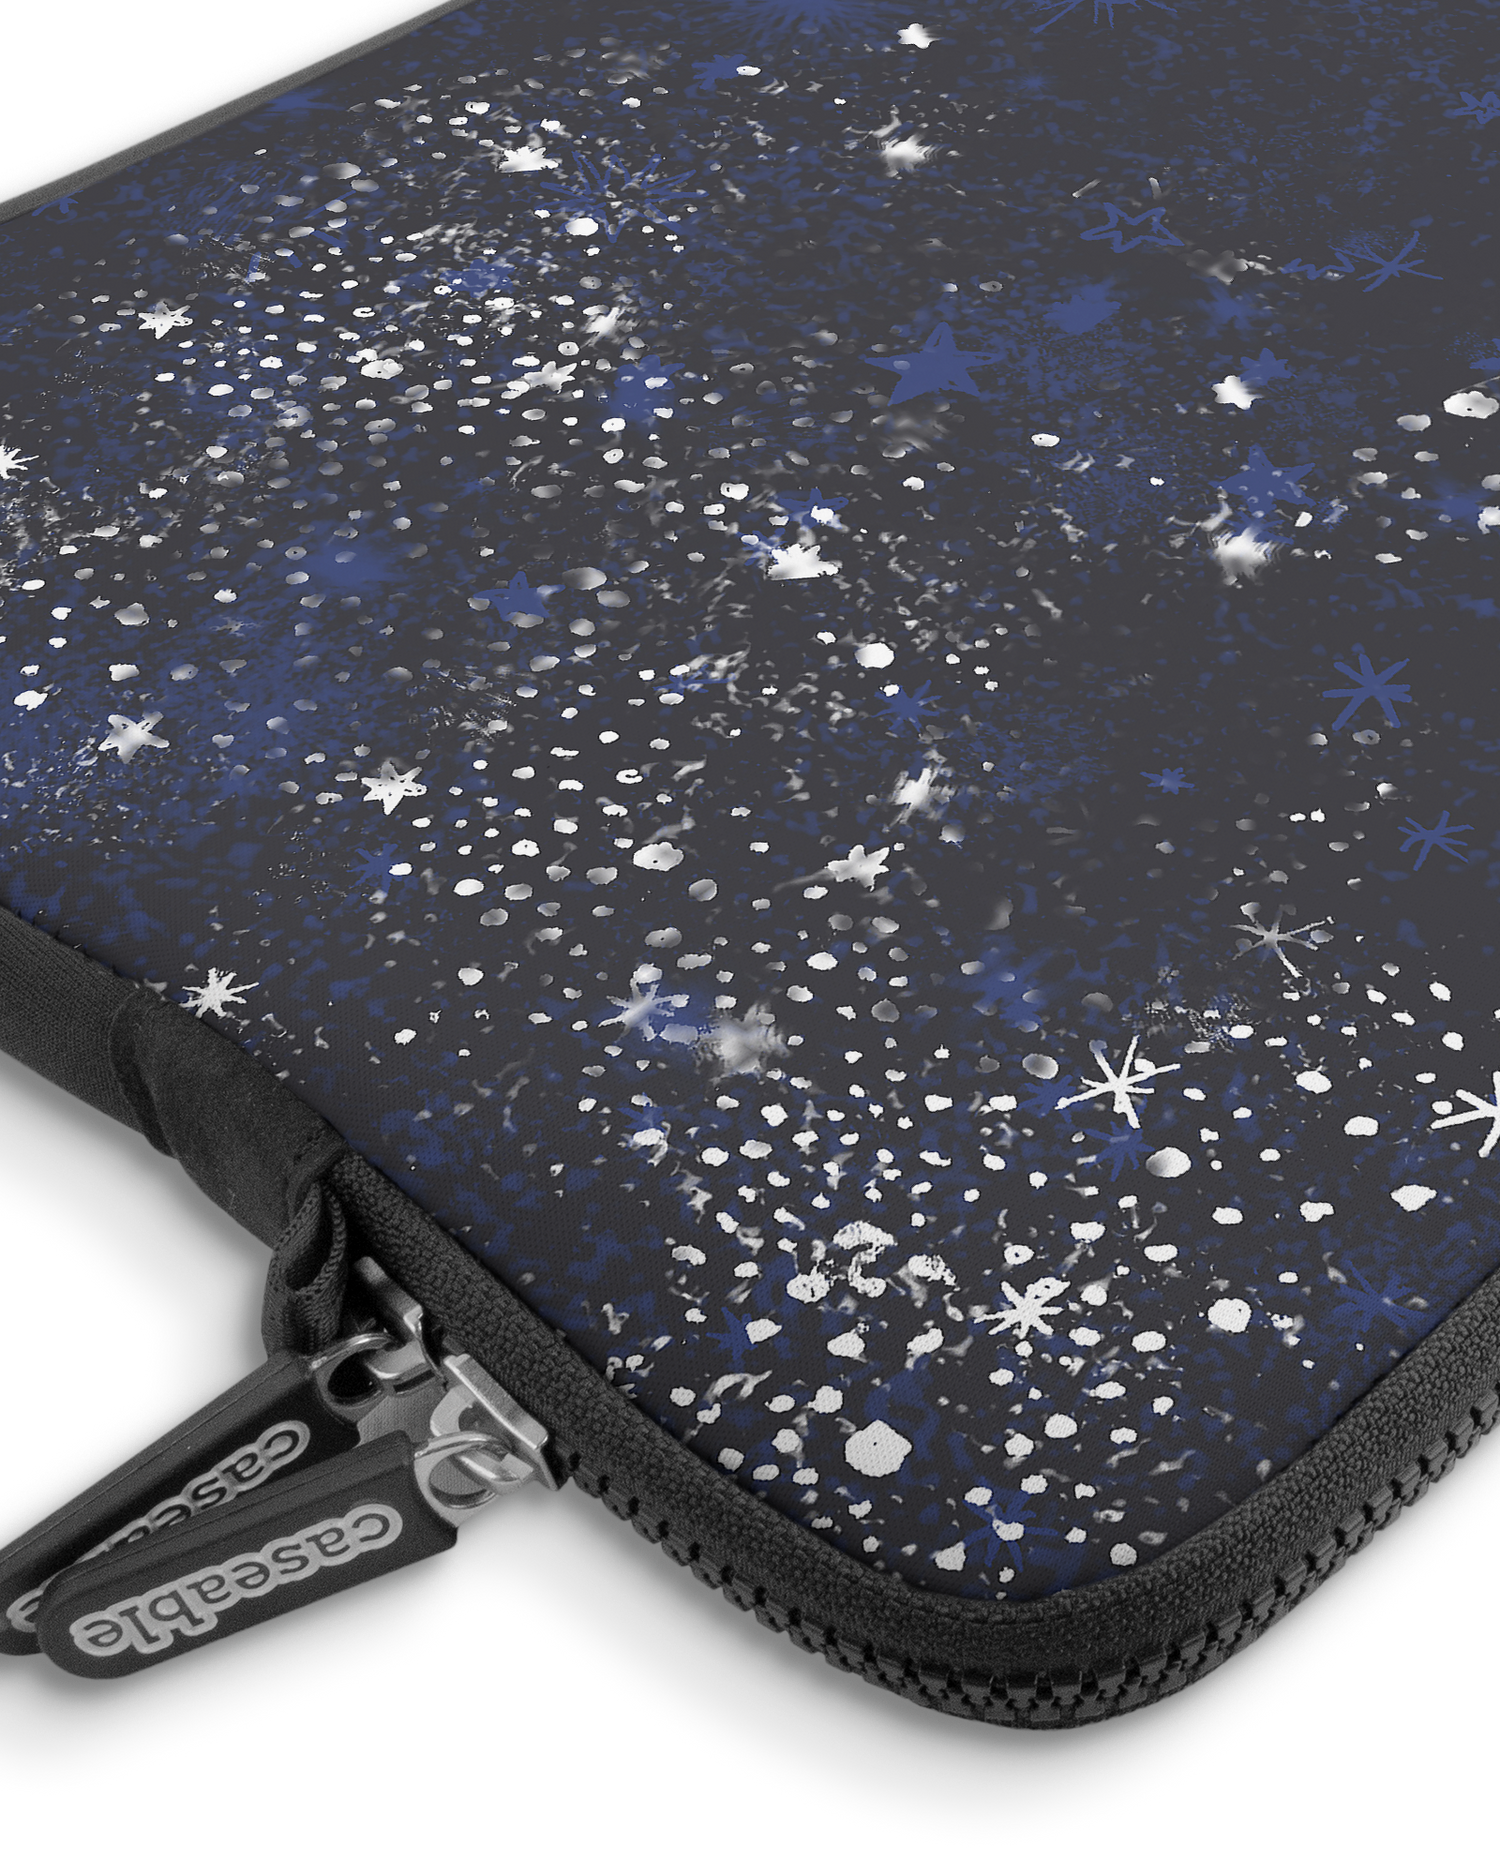 Starry Night Sky Premium Laptoptasche 13-14 Zoll mit Gerät im Inneren